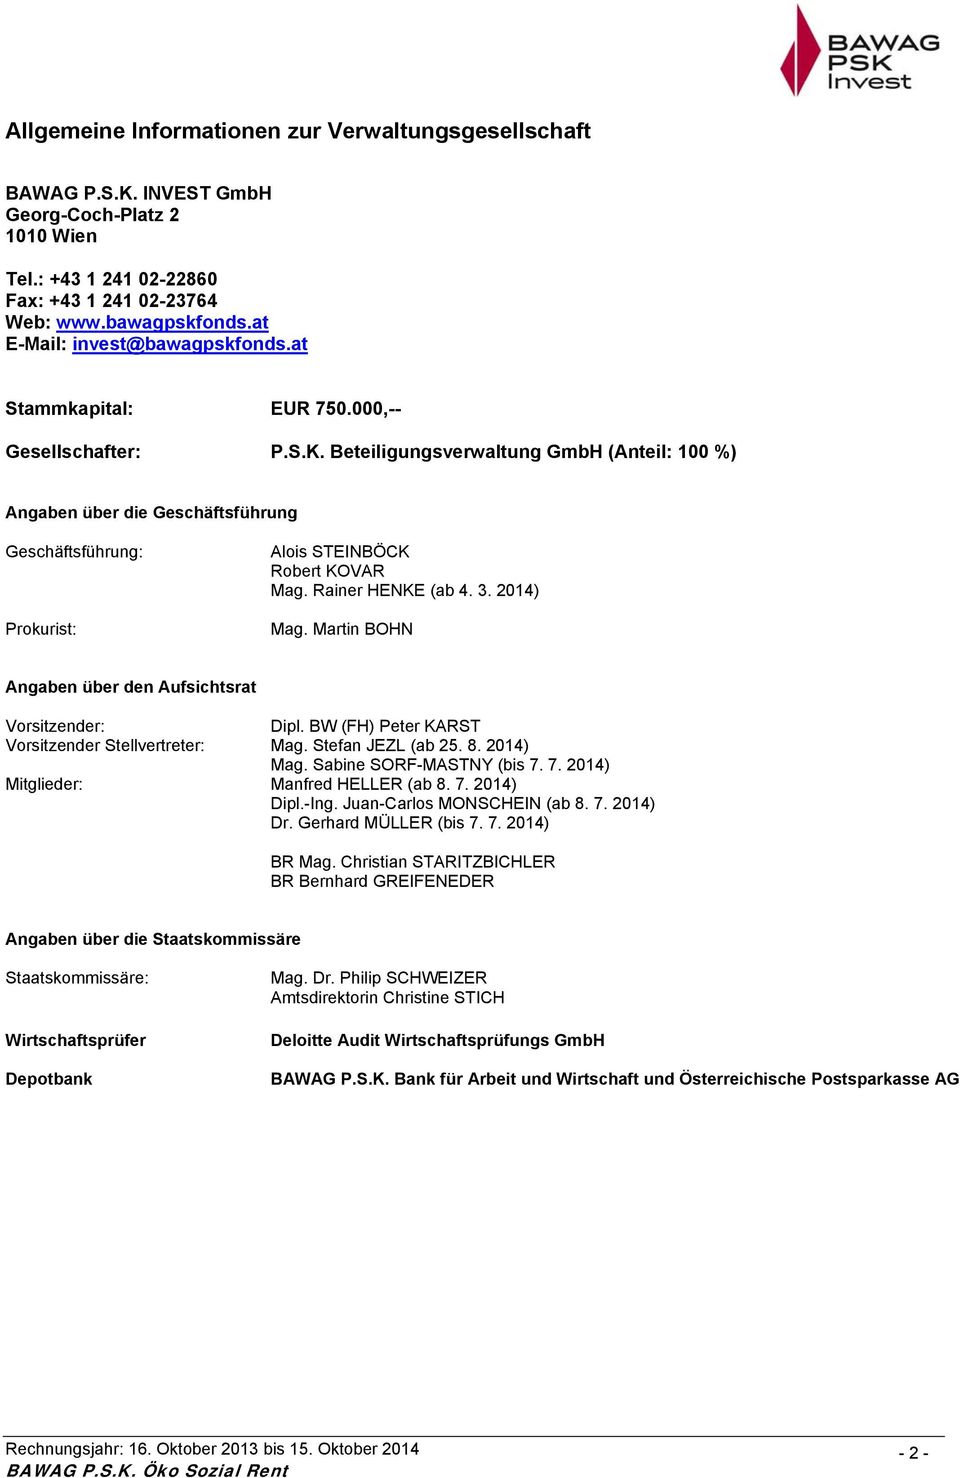 Beteiligungsverwaltung GmbH (Anteil: 100 %) Angaben über die Geschäftsführung Geschäftsführung: Prokurist: Alois STEINBÖCK Robert KOVAR Mag. Rainer HENKE (ab 4. 3. 2014) Mag.